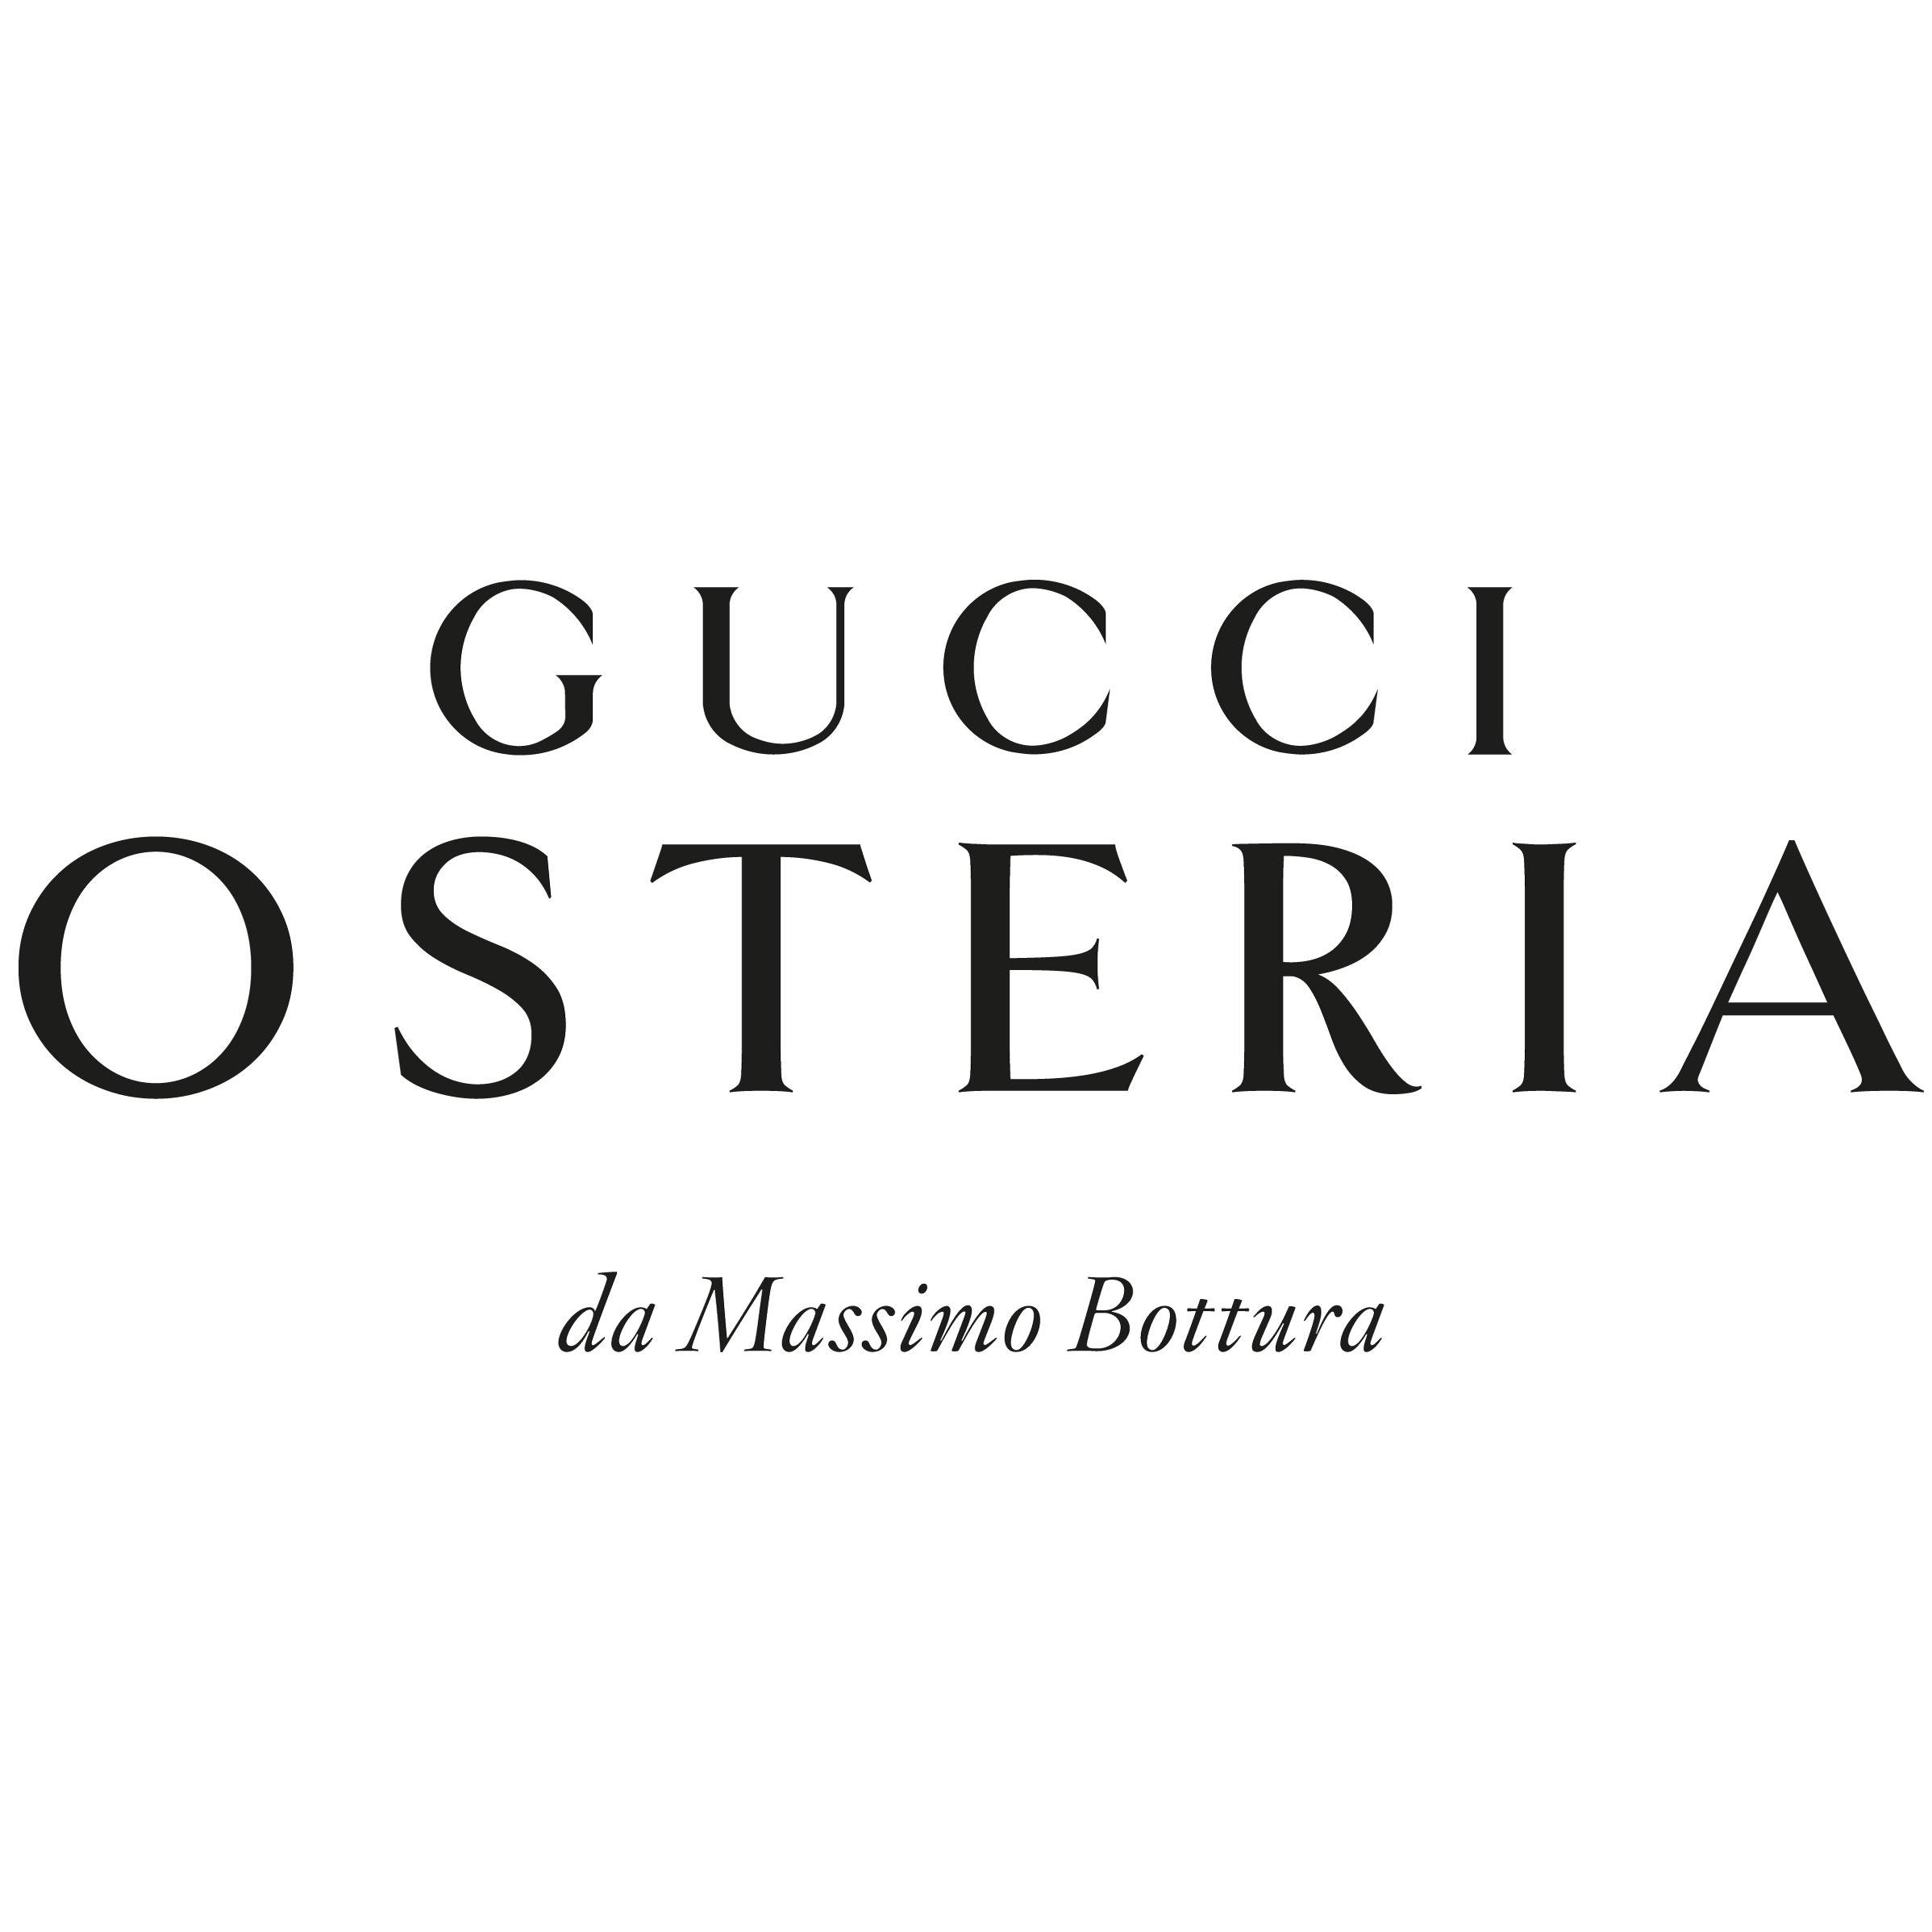 Gucci Osteria da Massimo Bottura - Ristoranti Firenze